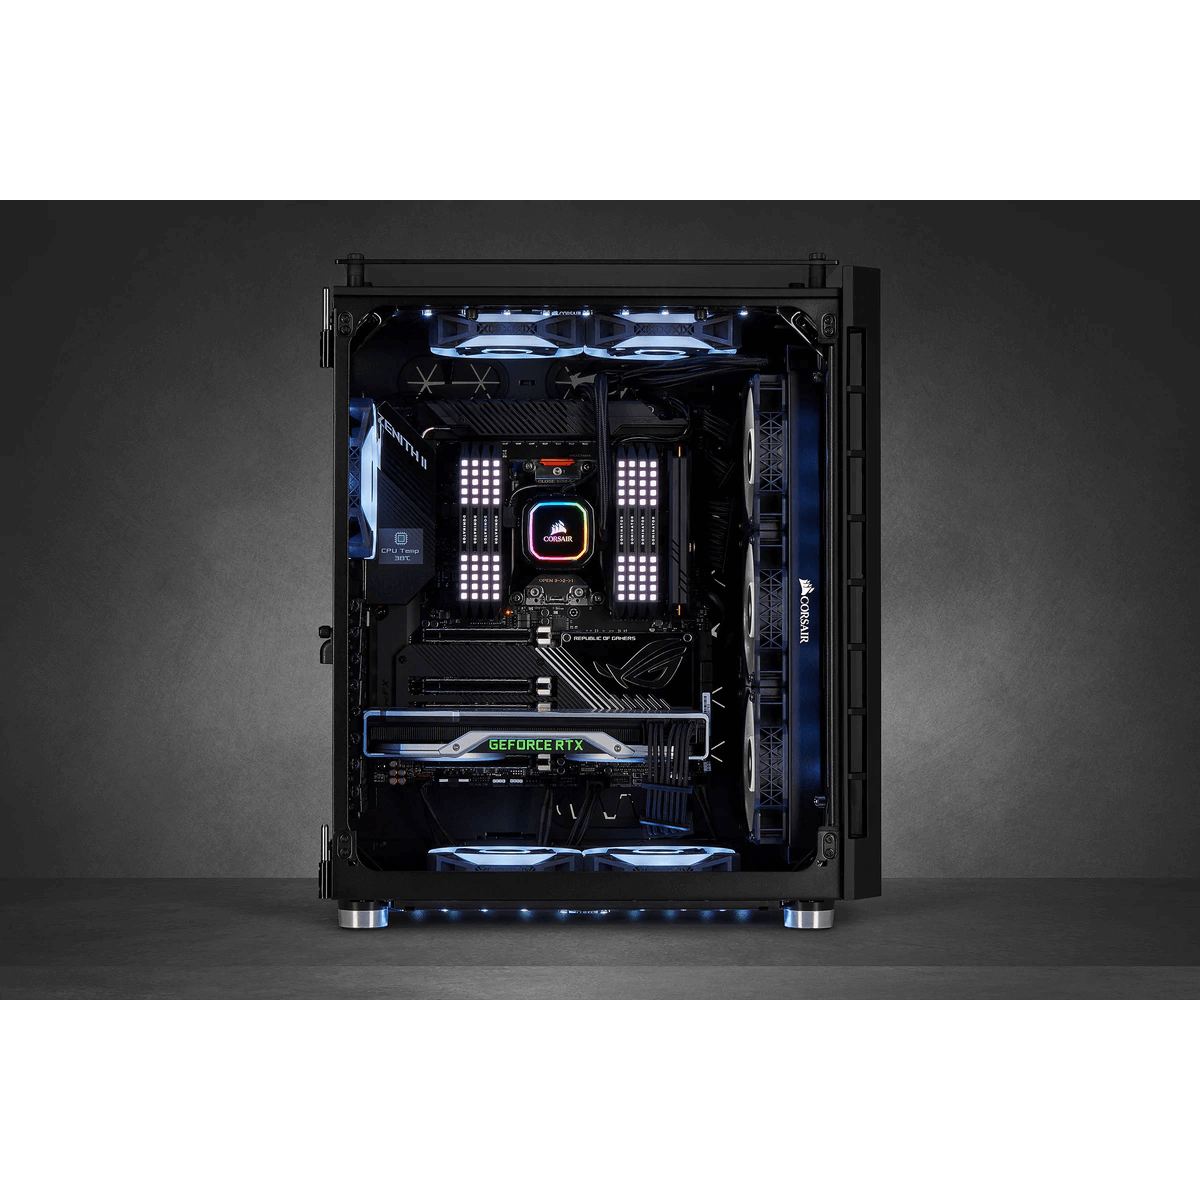 Water Cooler Corsair iCue H150i RGB PRO XT, 360mm, Intel-AMD, CW-9060045-WW